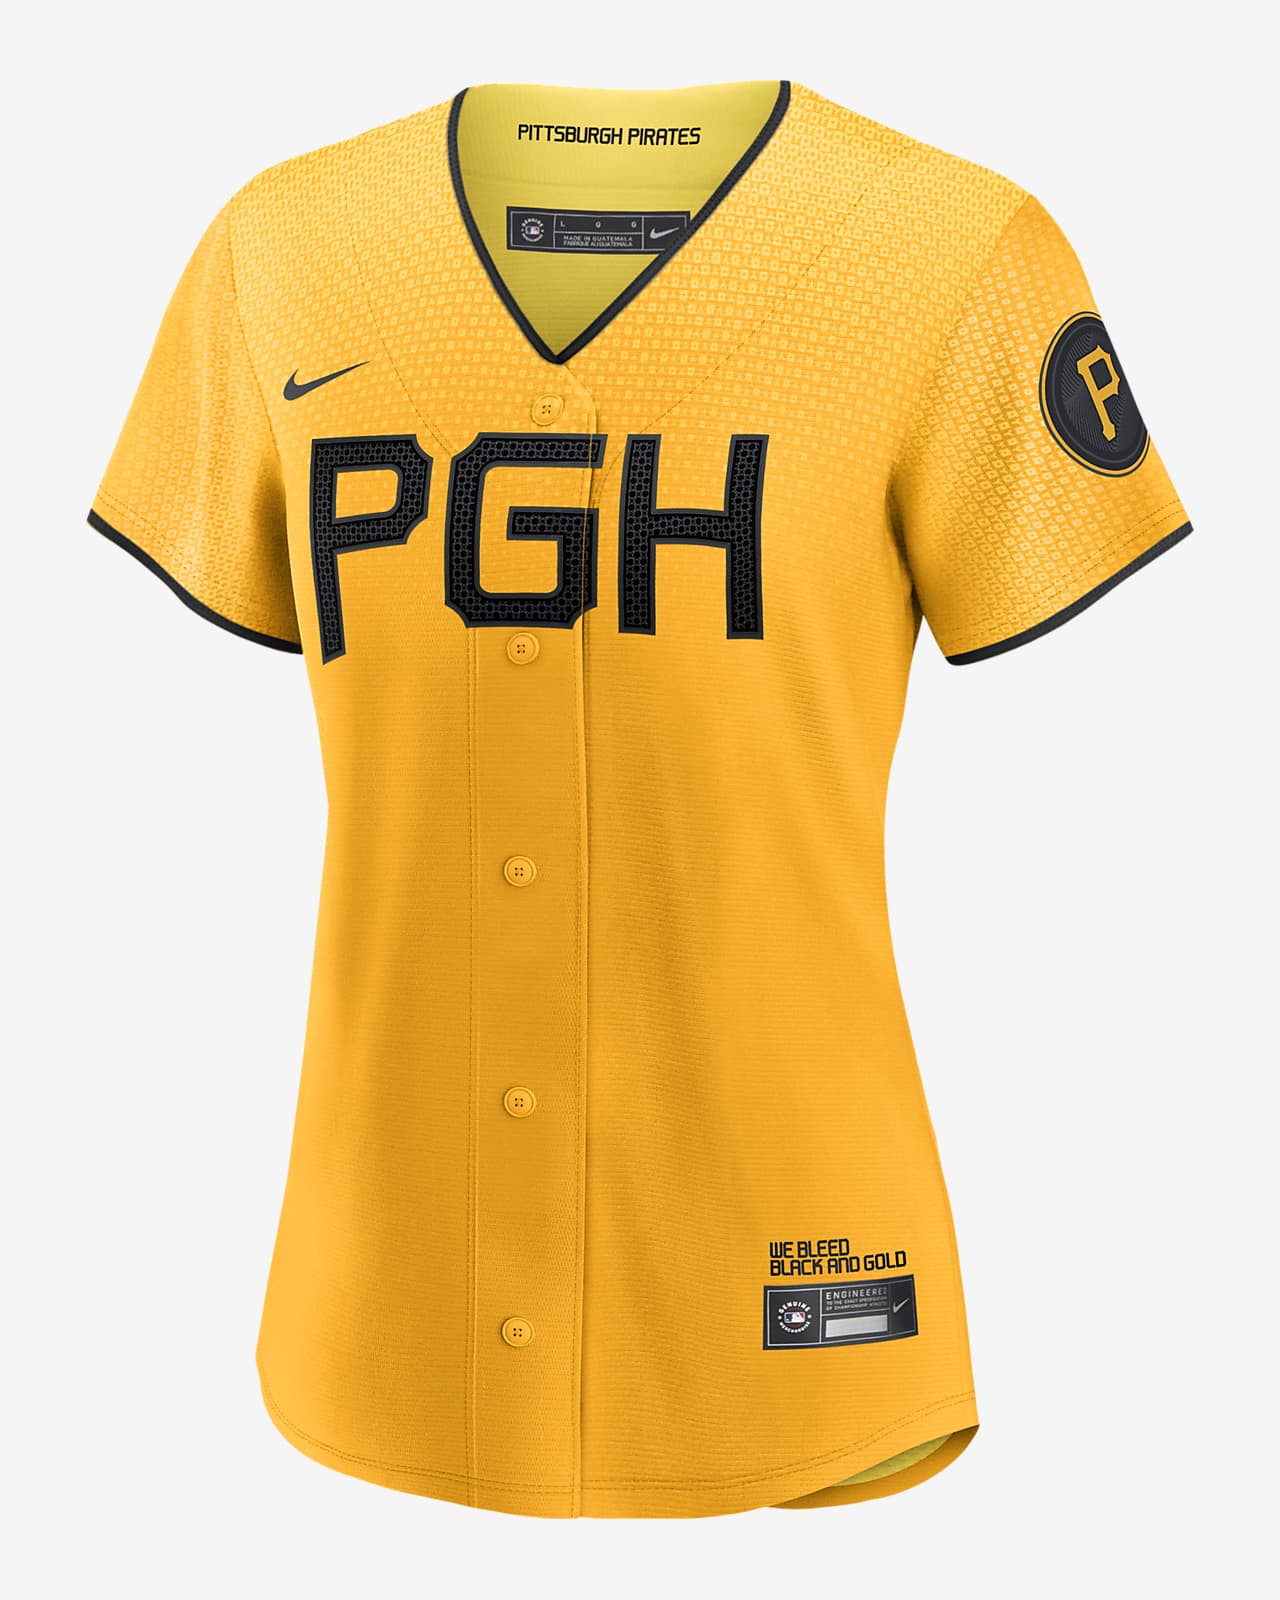 MLB Pittsburgh Pirates City Connect (Bryan Reynolds) Women's Replica Baseball Jersey